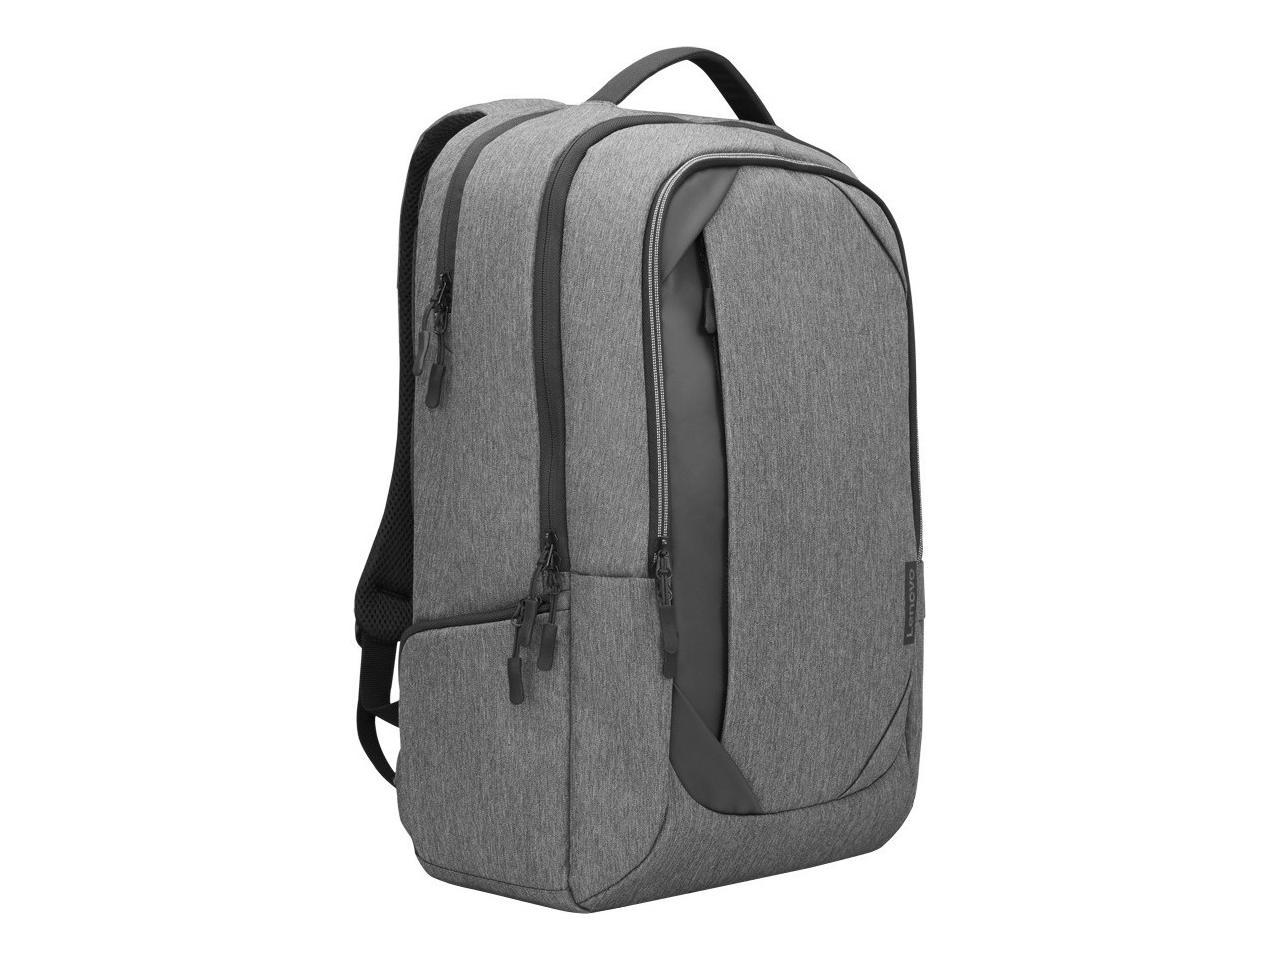 Lenovo 17-inch Laptop Urban Backpack B730 - Newegg.com